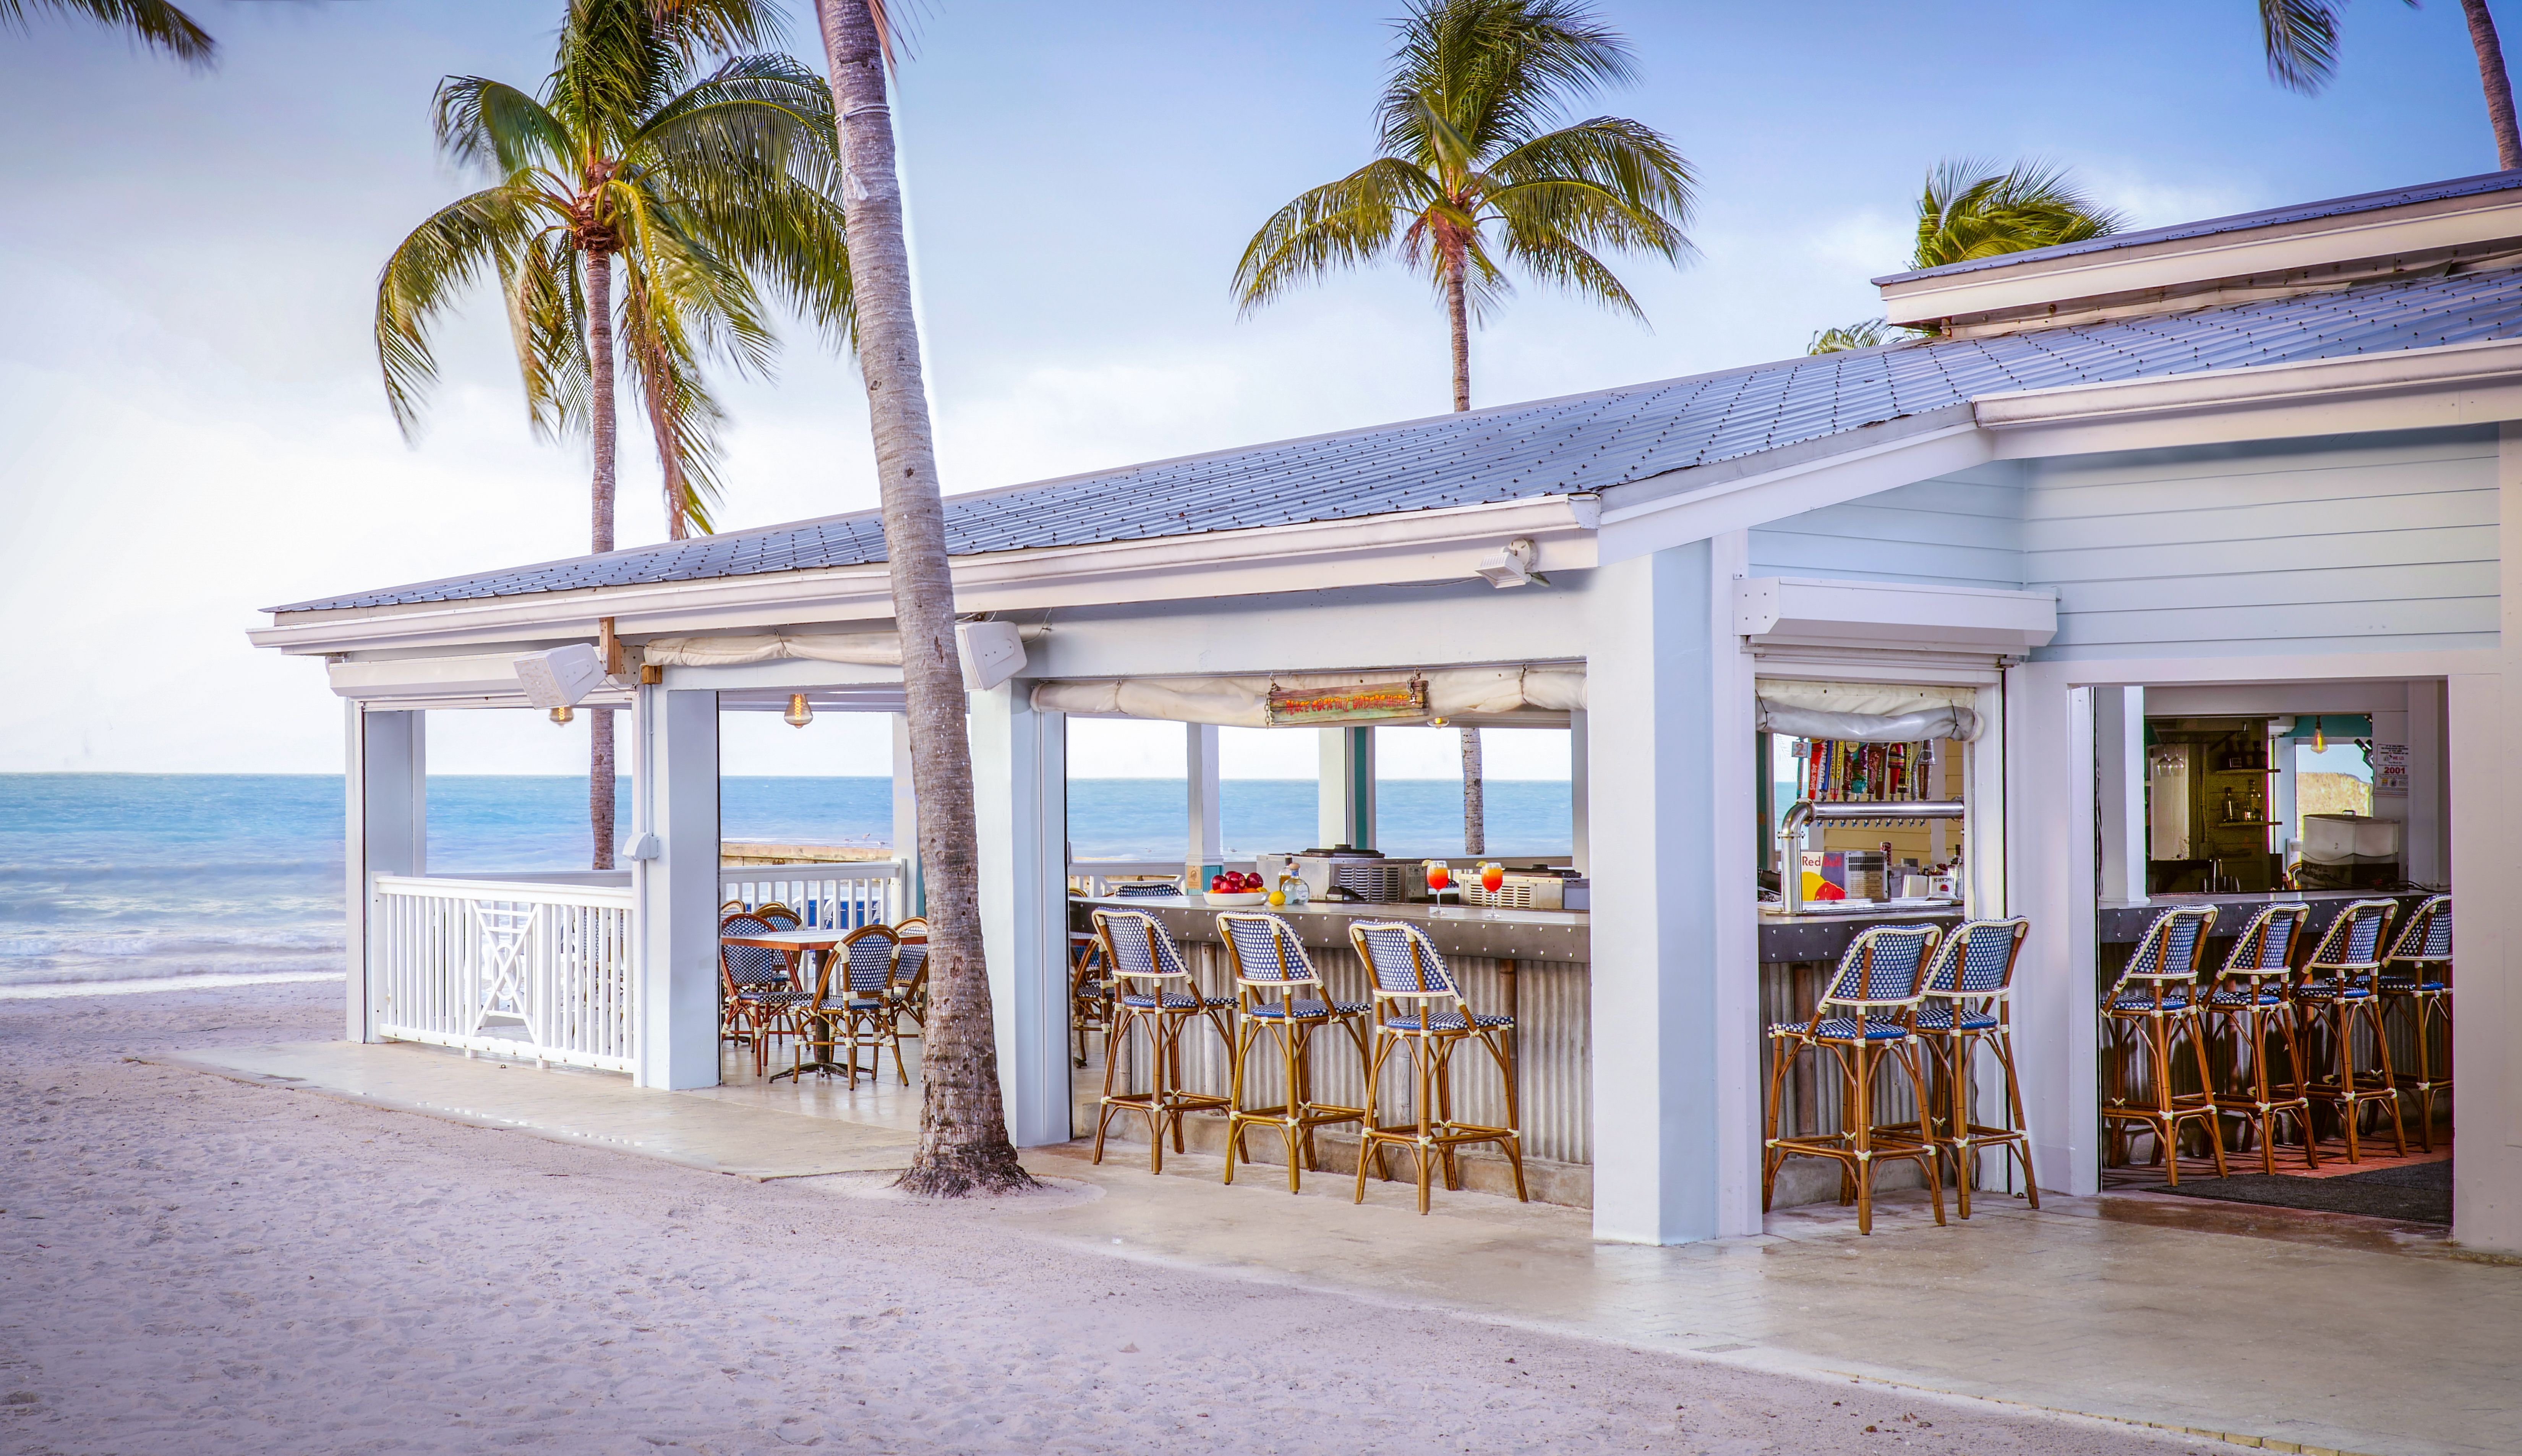 Southernmost Beach Resort's Bar